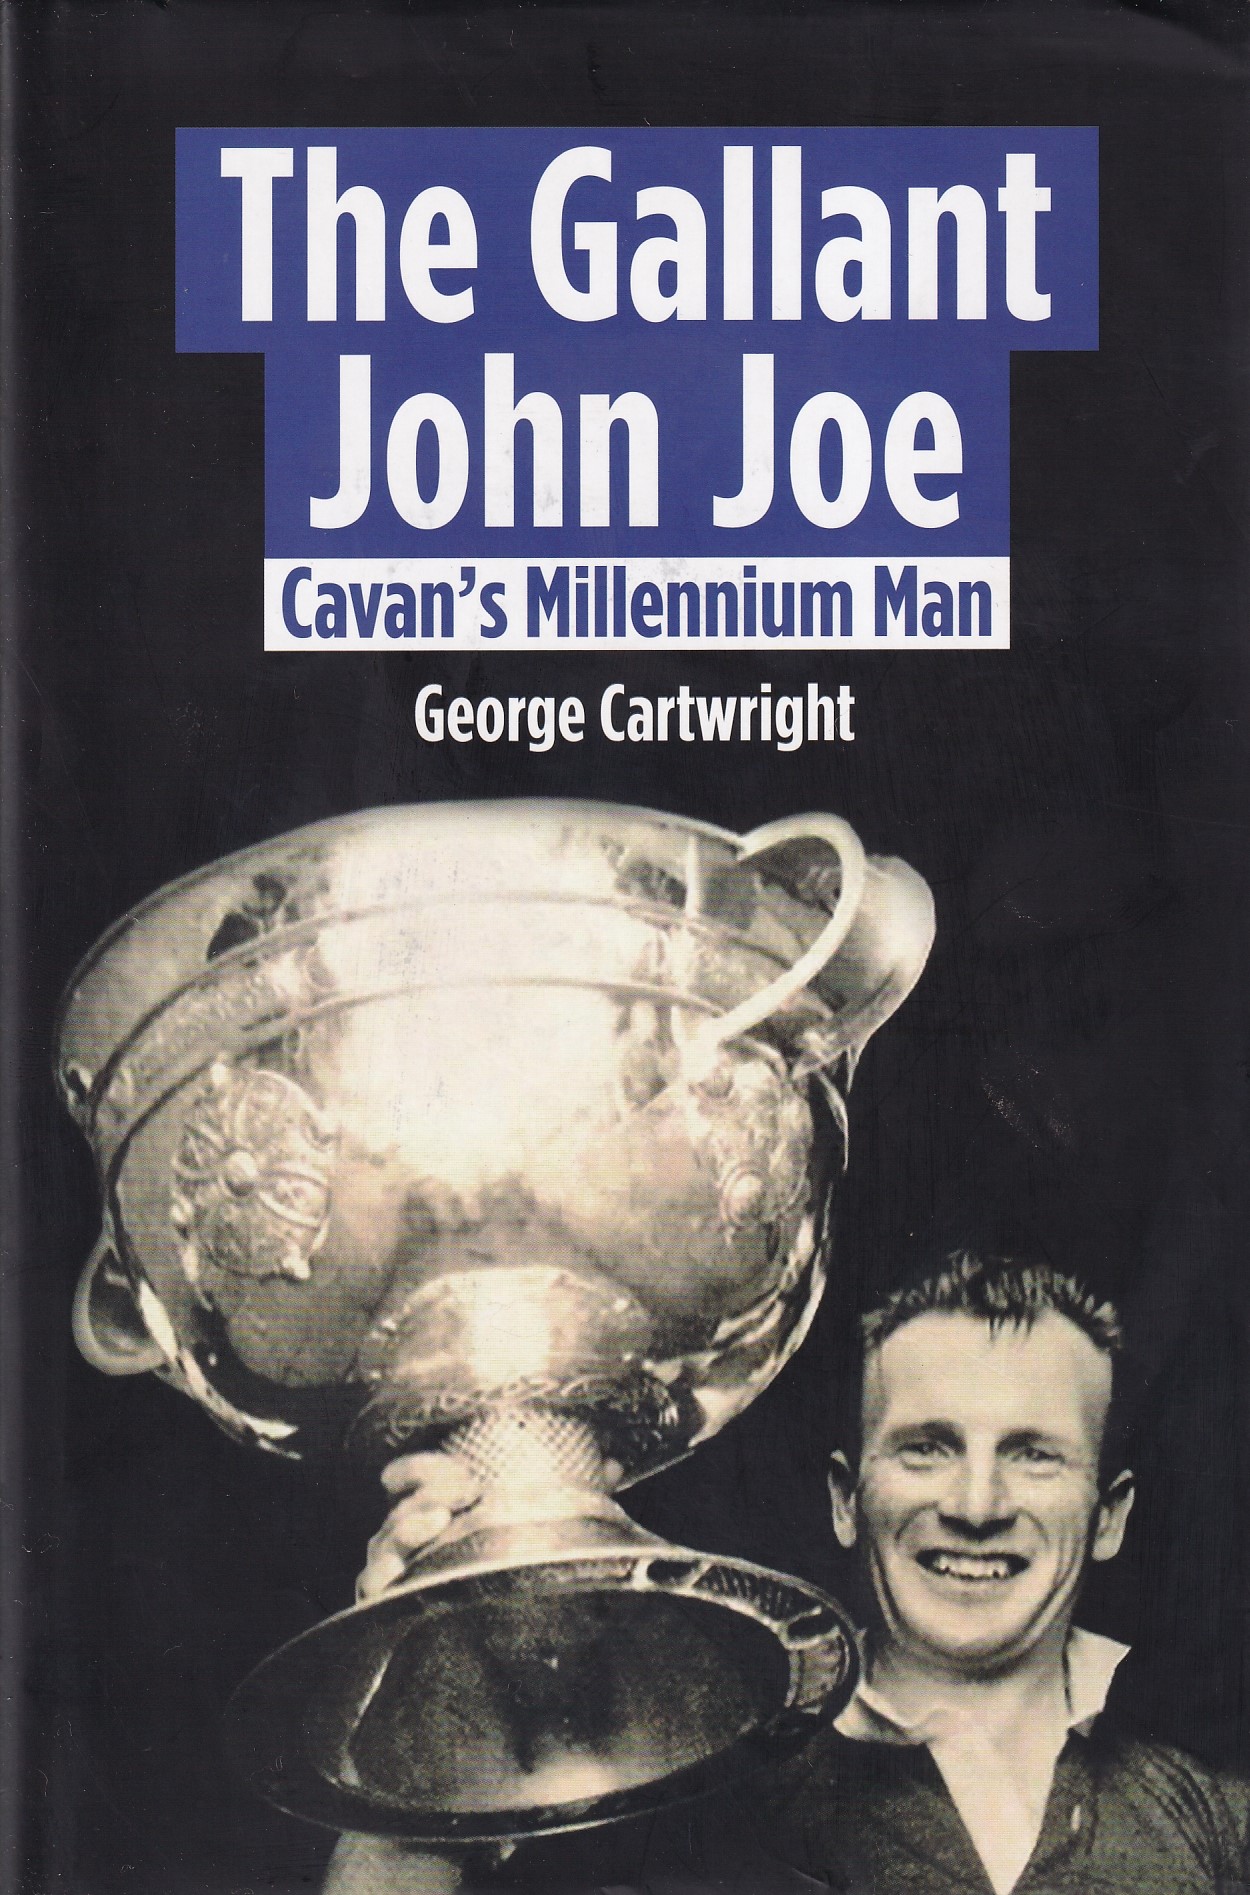 The Gallant John Joe: Cavan’s Millennium Man [SIGNED] | George Cartwright | Charlie Byrne's